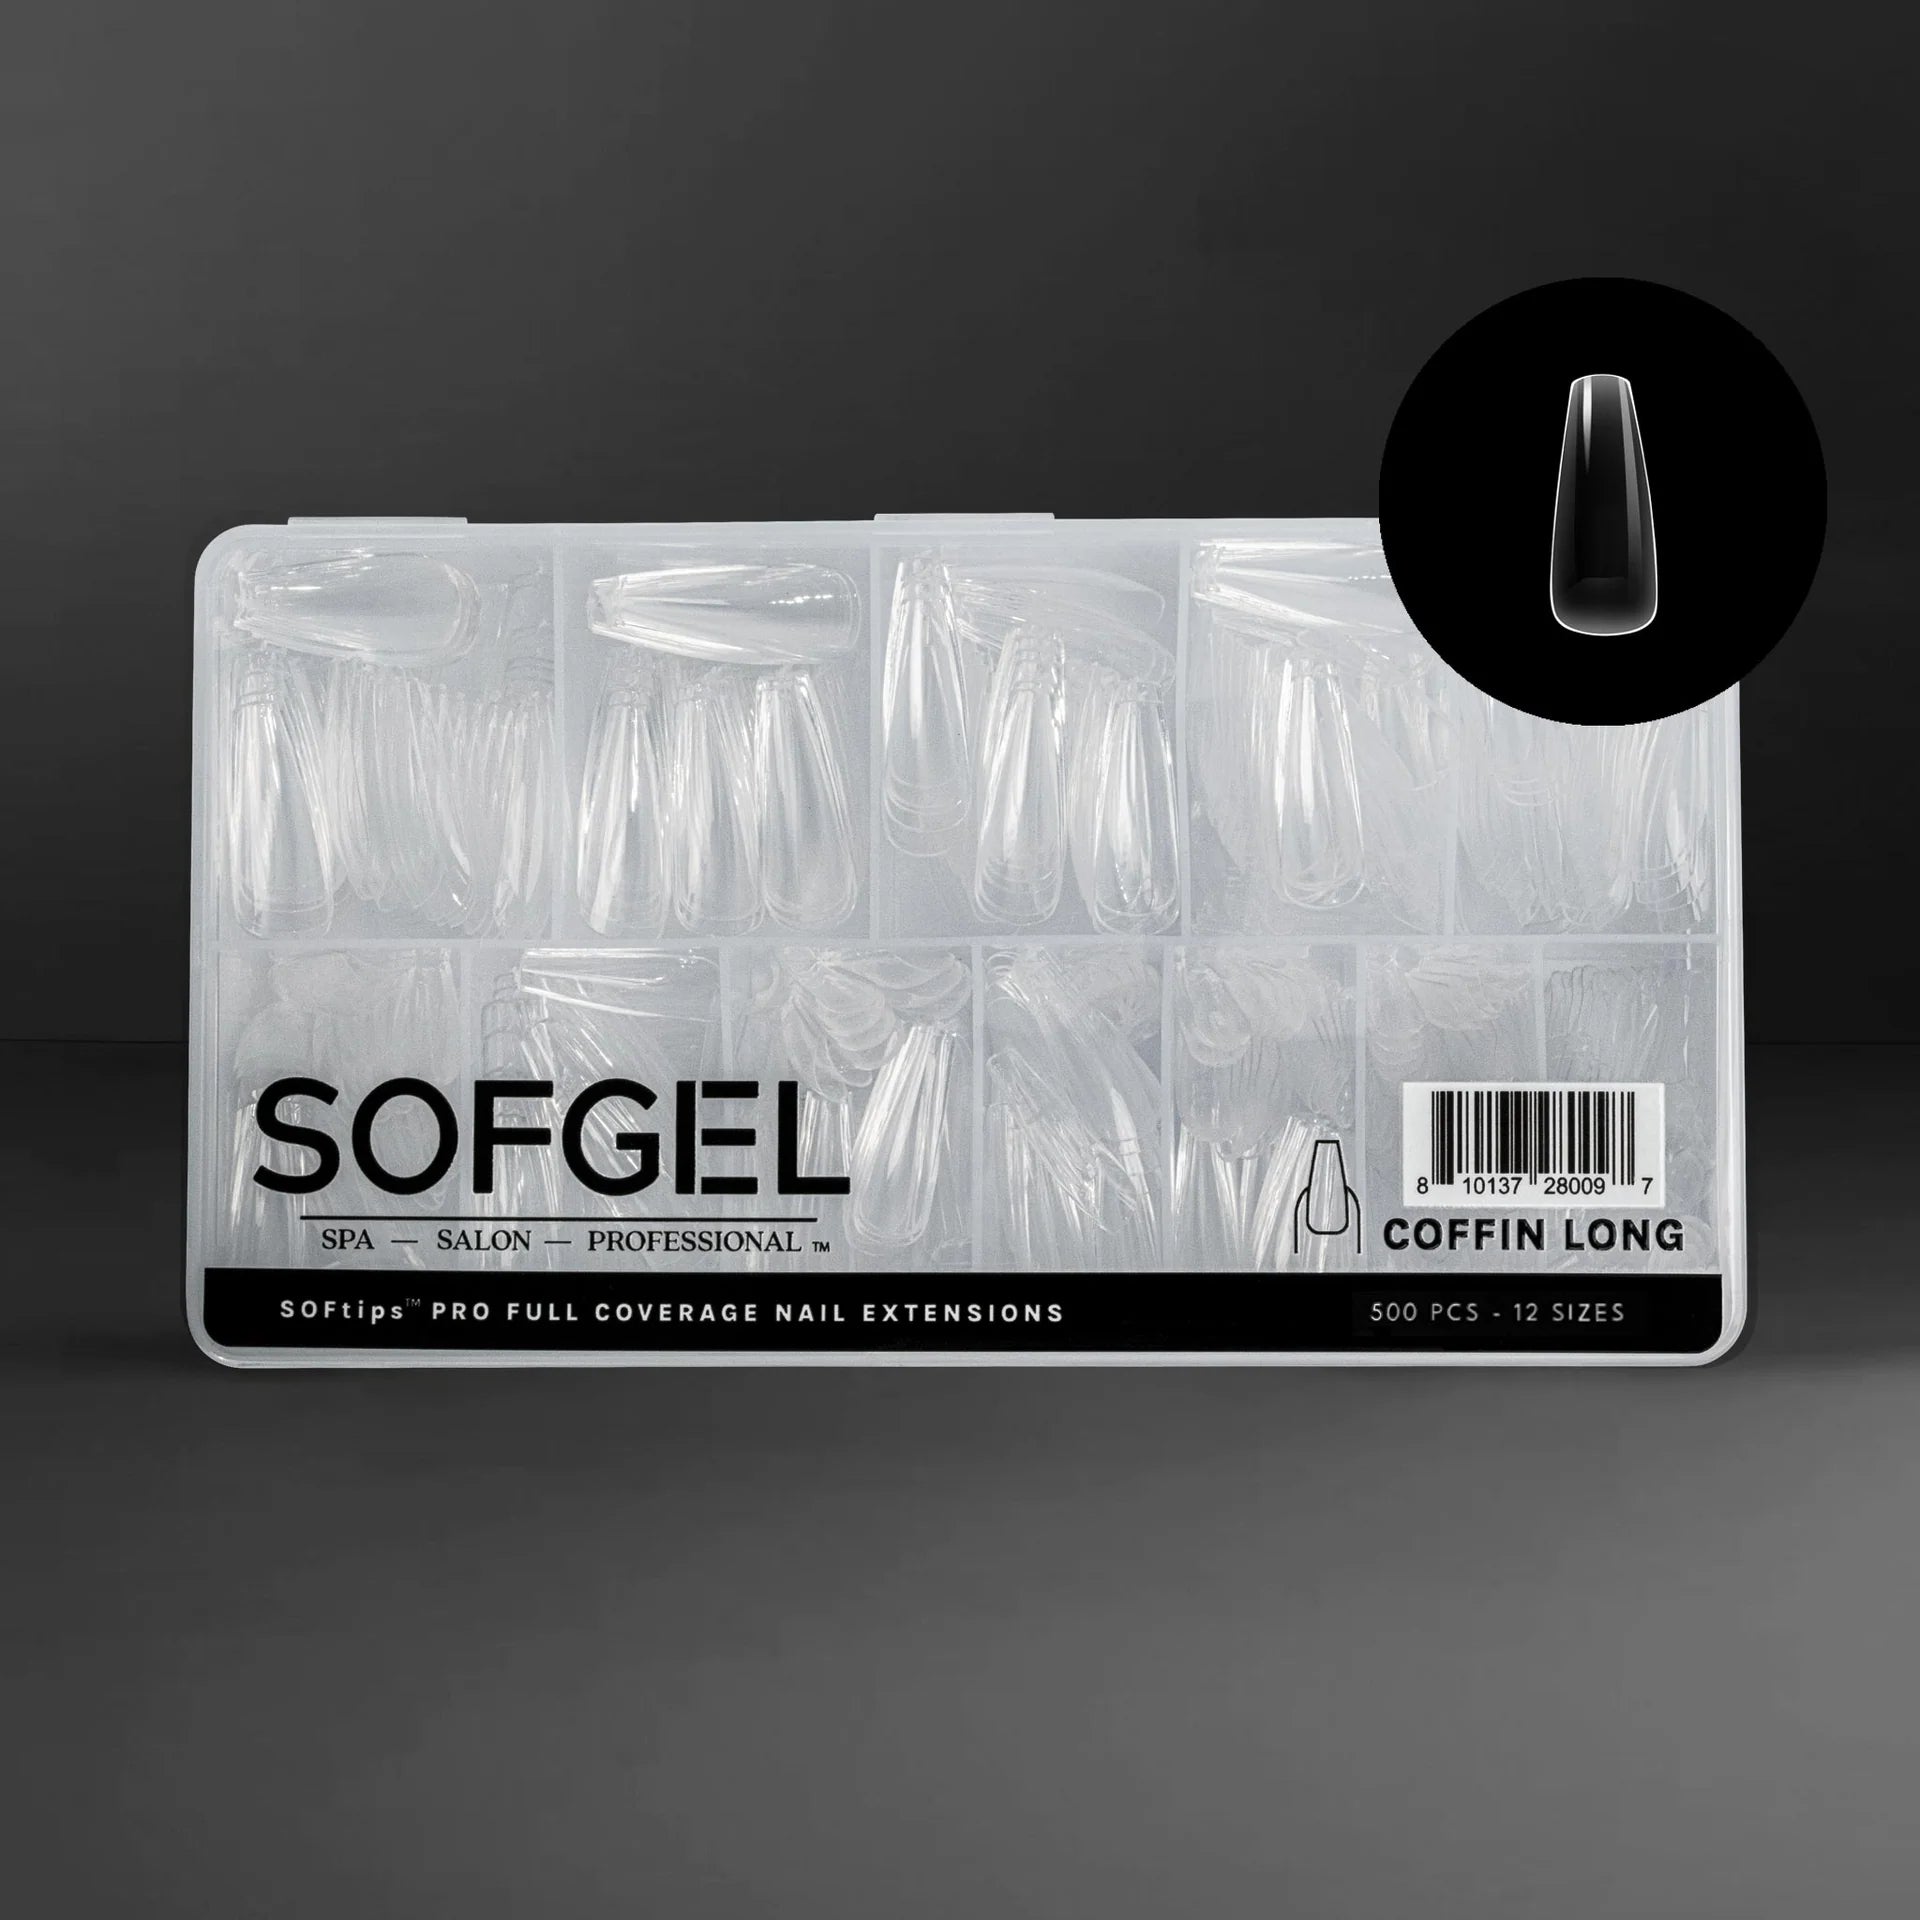 SOFtips™ Full Cover Nail Tips - Standard Coffin Long